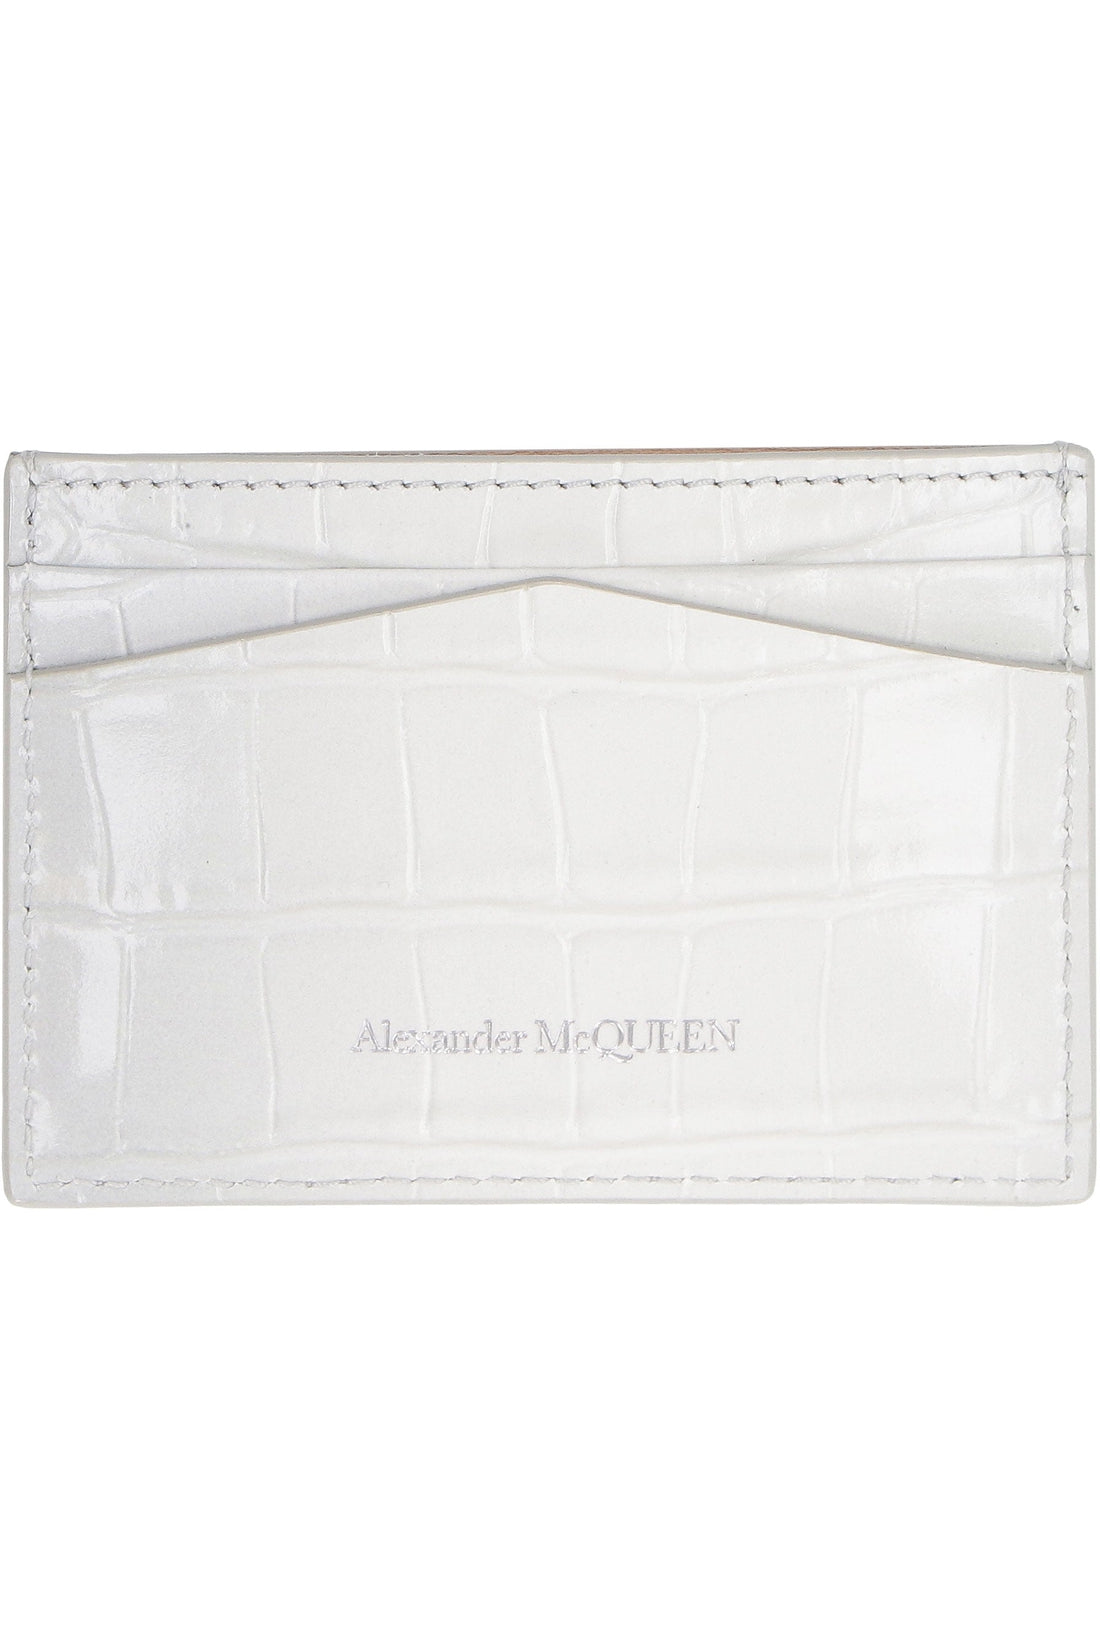 Alexander McQueen-OUTLET-SALE-Skull leather wallet-ARCHIVIST